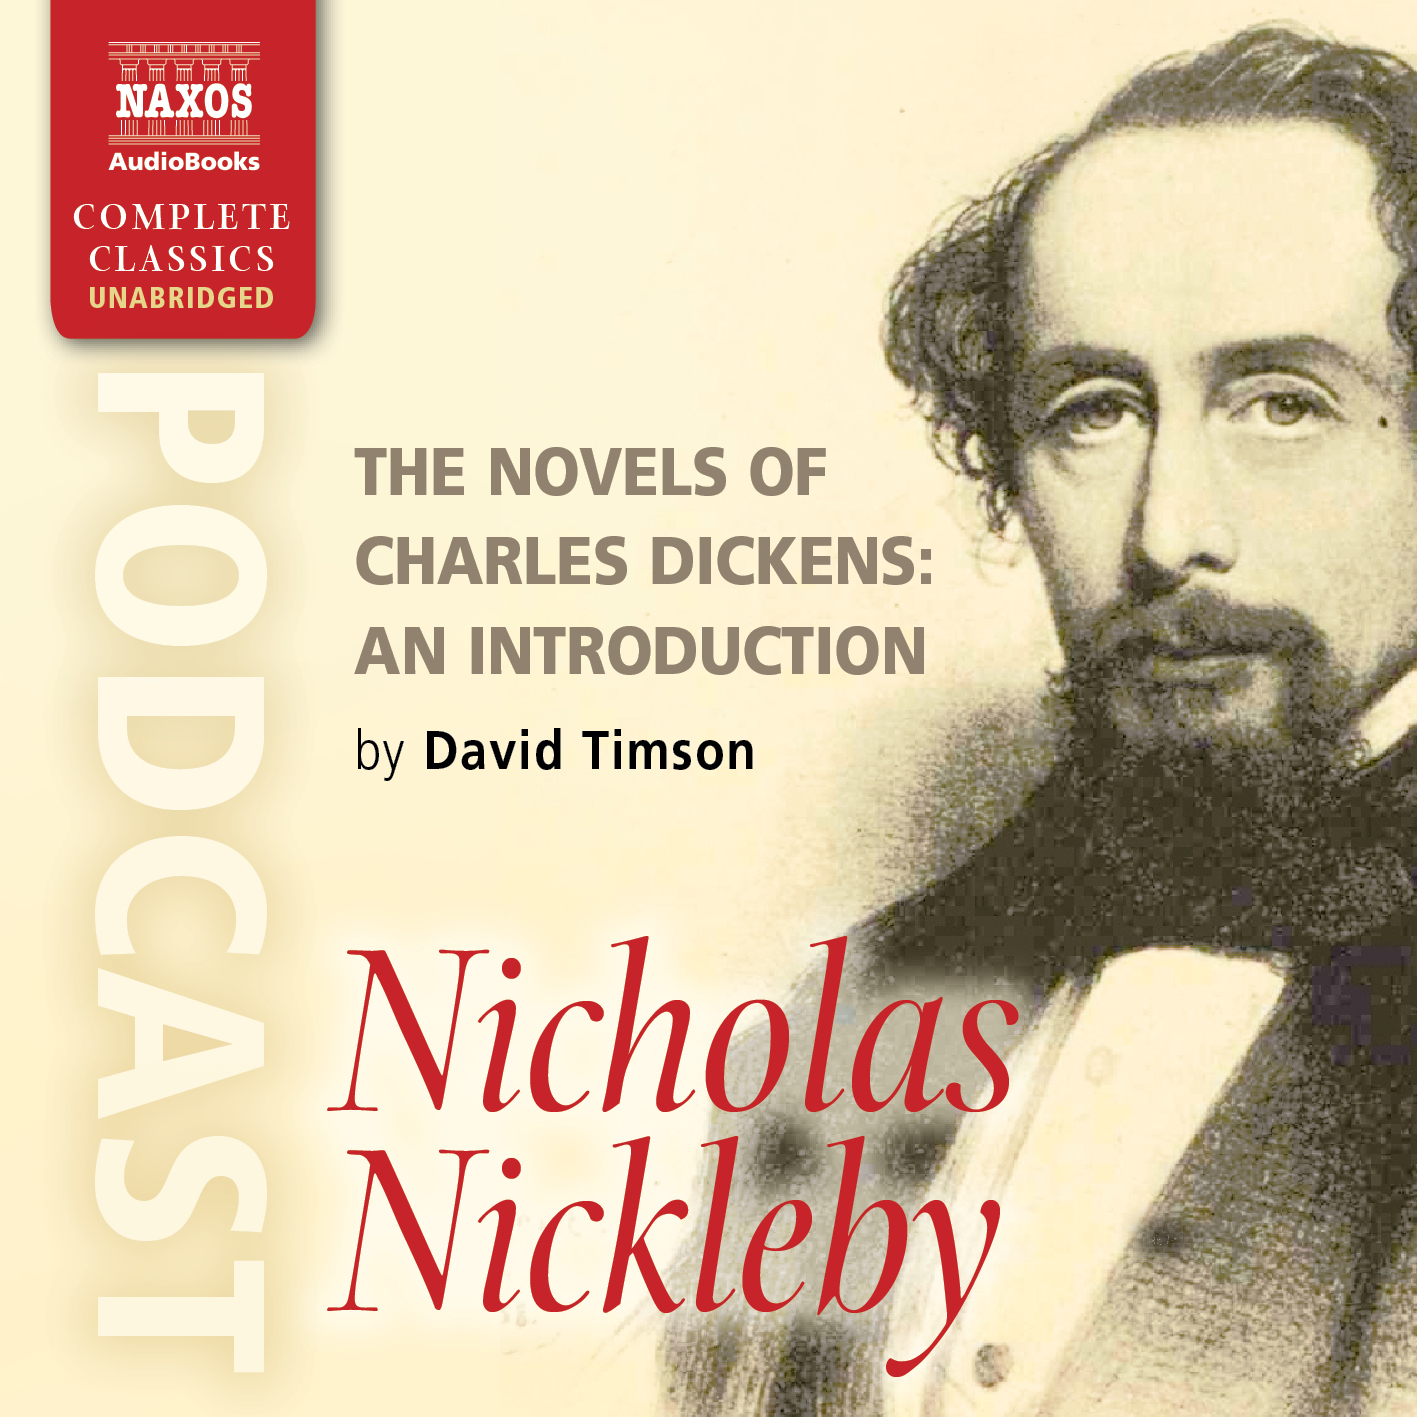 https://naxosaudiobooks.com/wp-content/uploads/2019/08/NA0393_Nicholas_Nickleby_Podcast.jpg